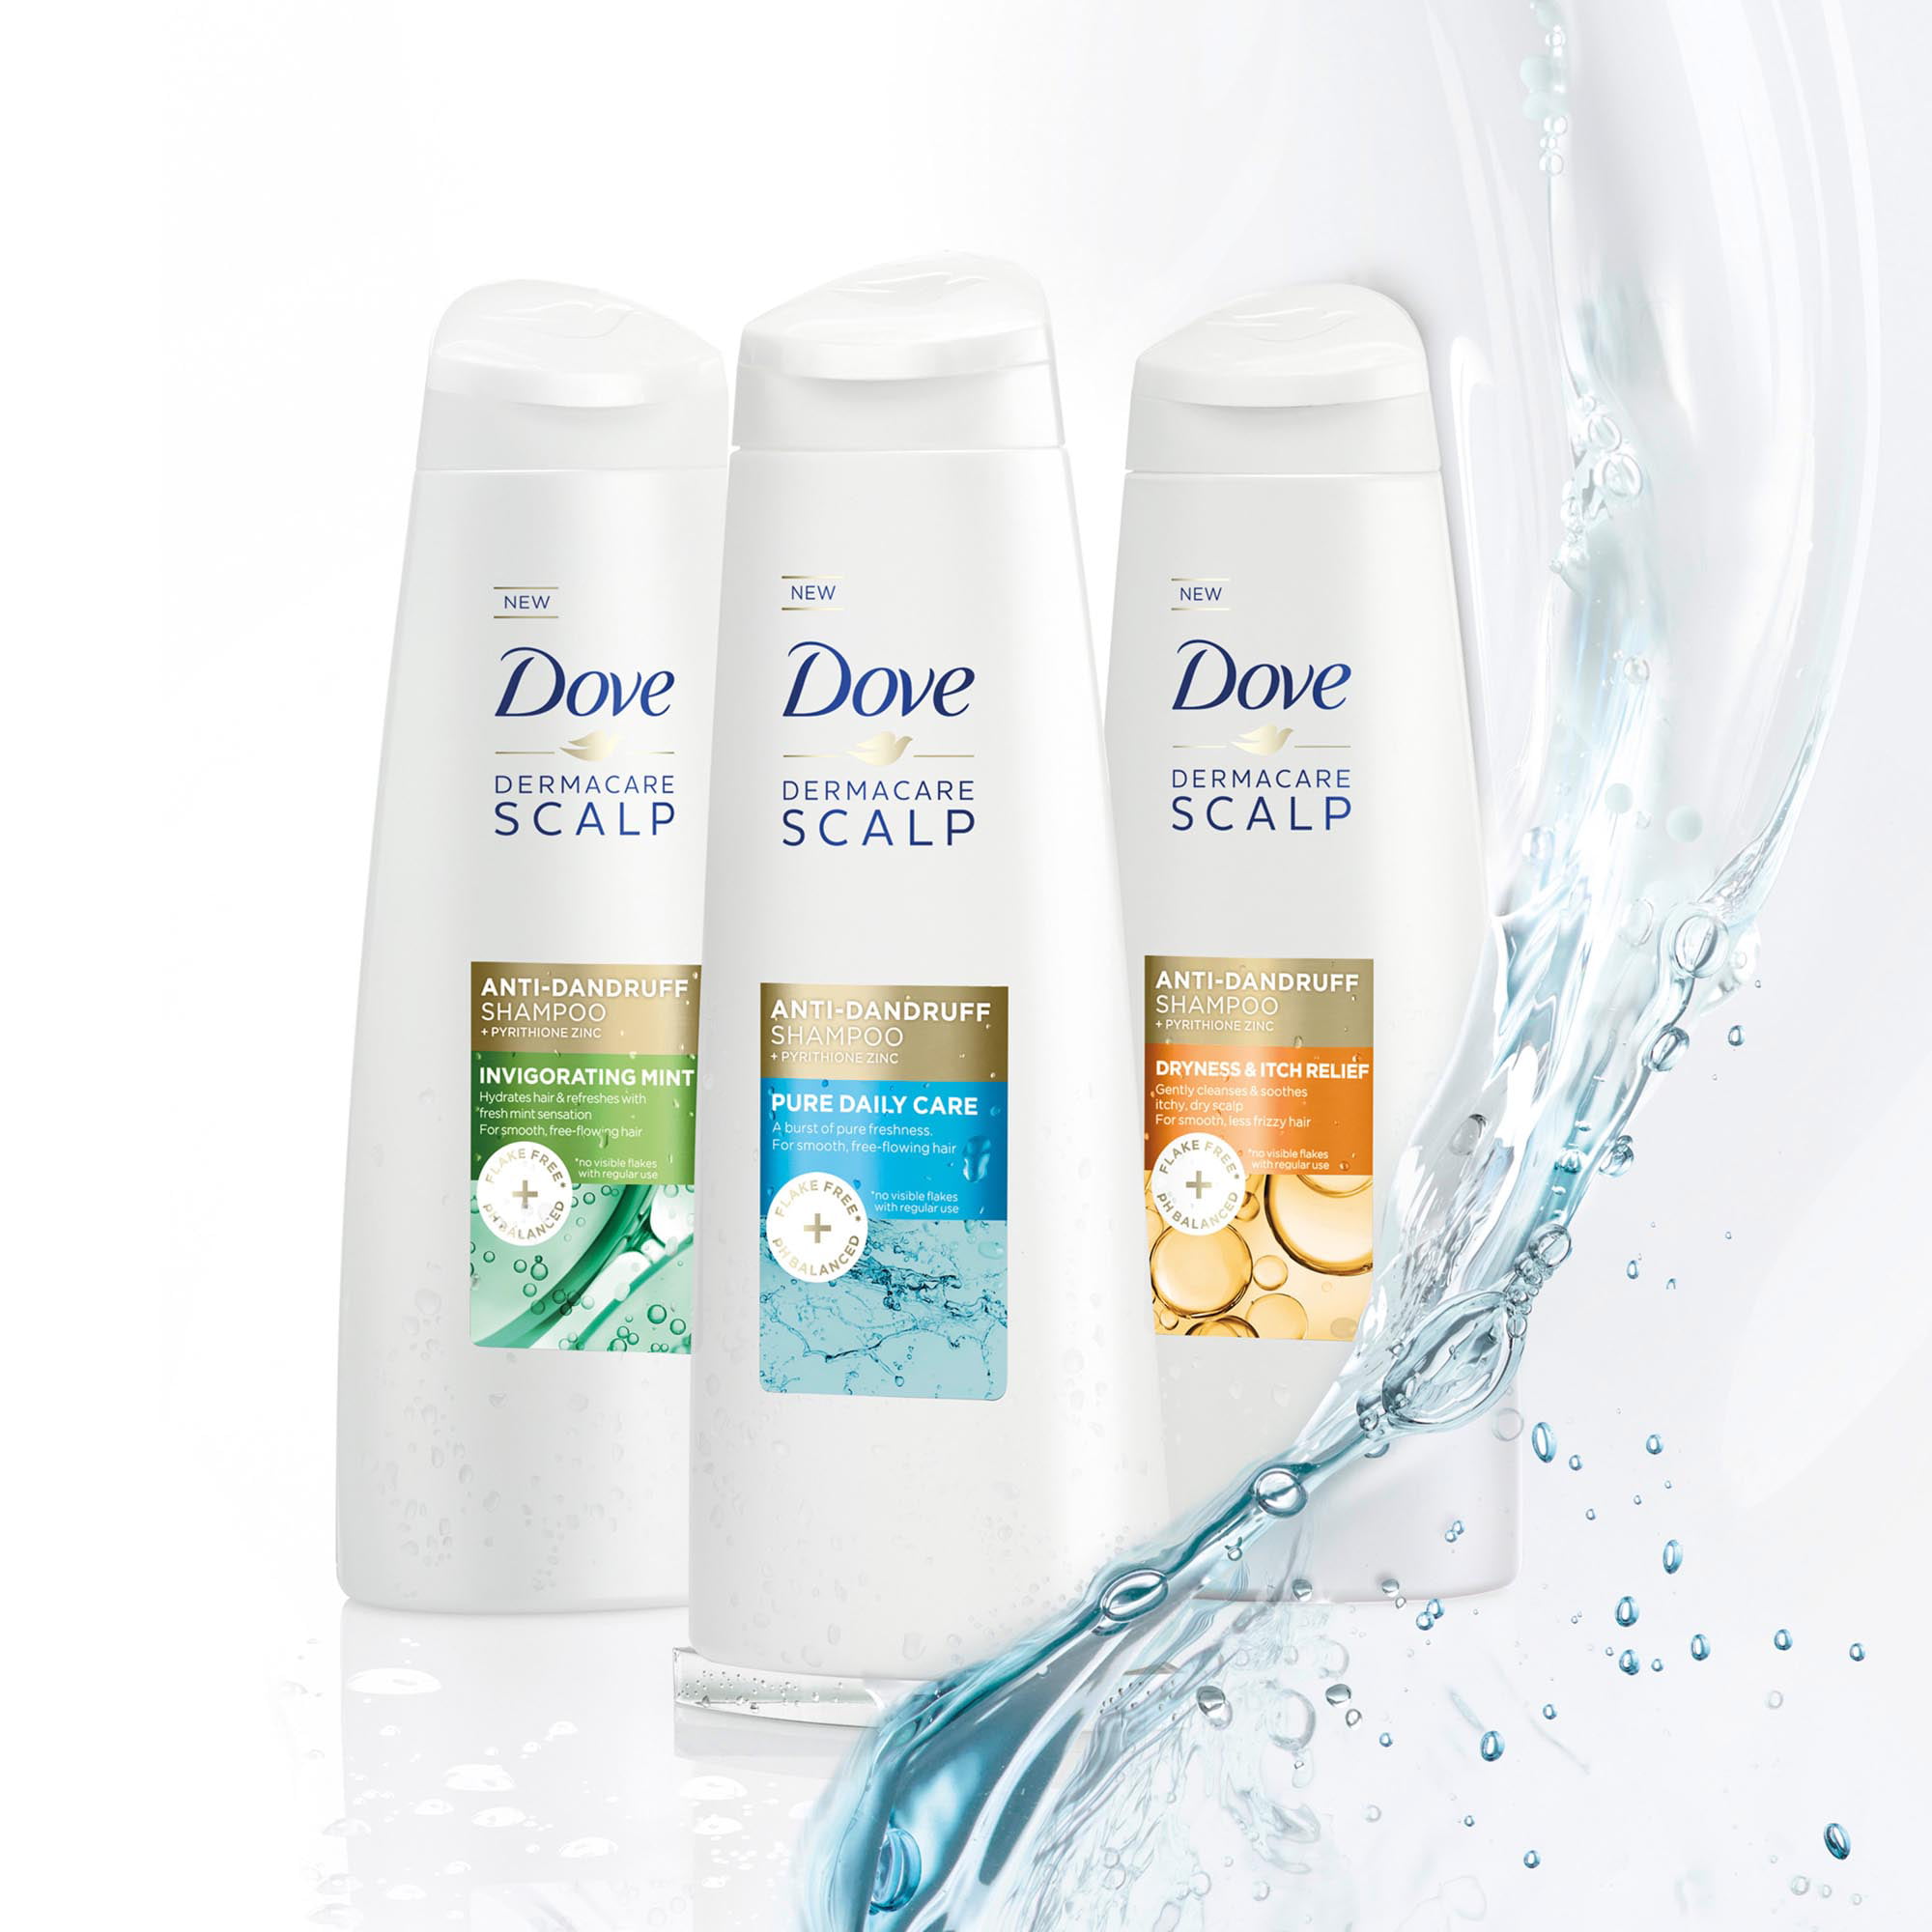 Dove Dermacare Scalp Anti Dandruff Daily Shampoo with Pyrithione Zinc, 12 fl oz - image 5 of 11